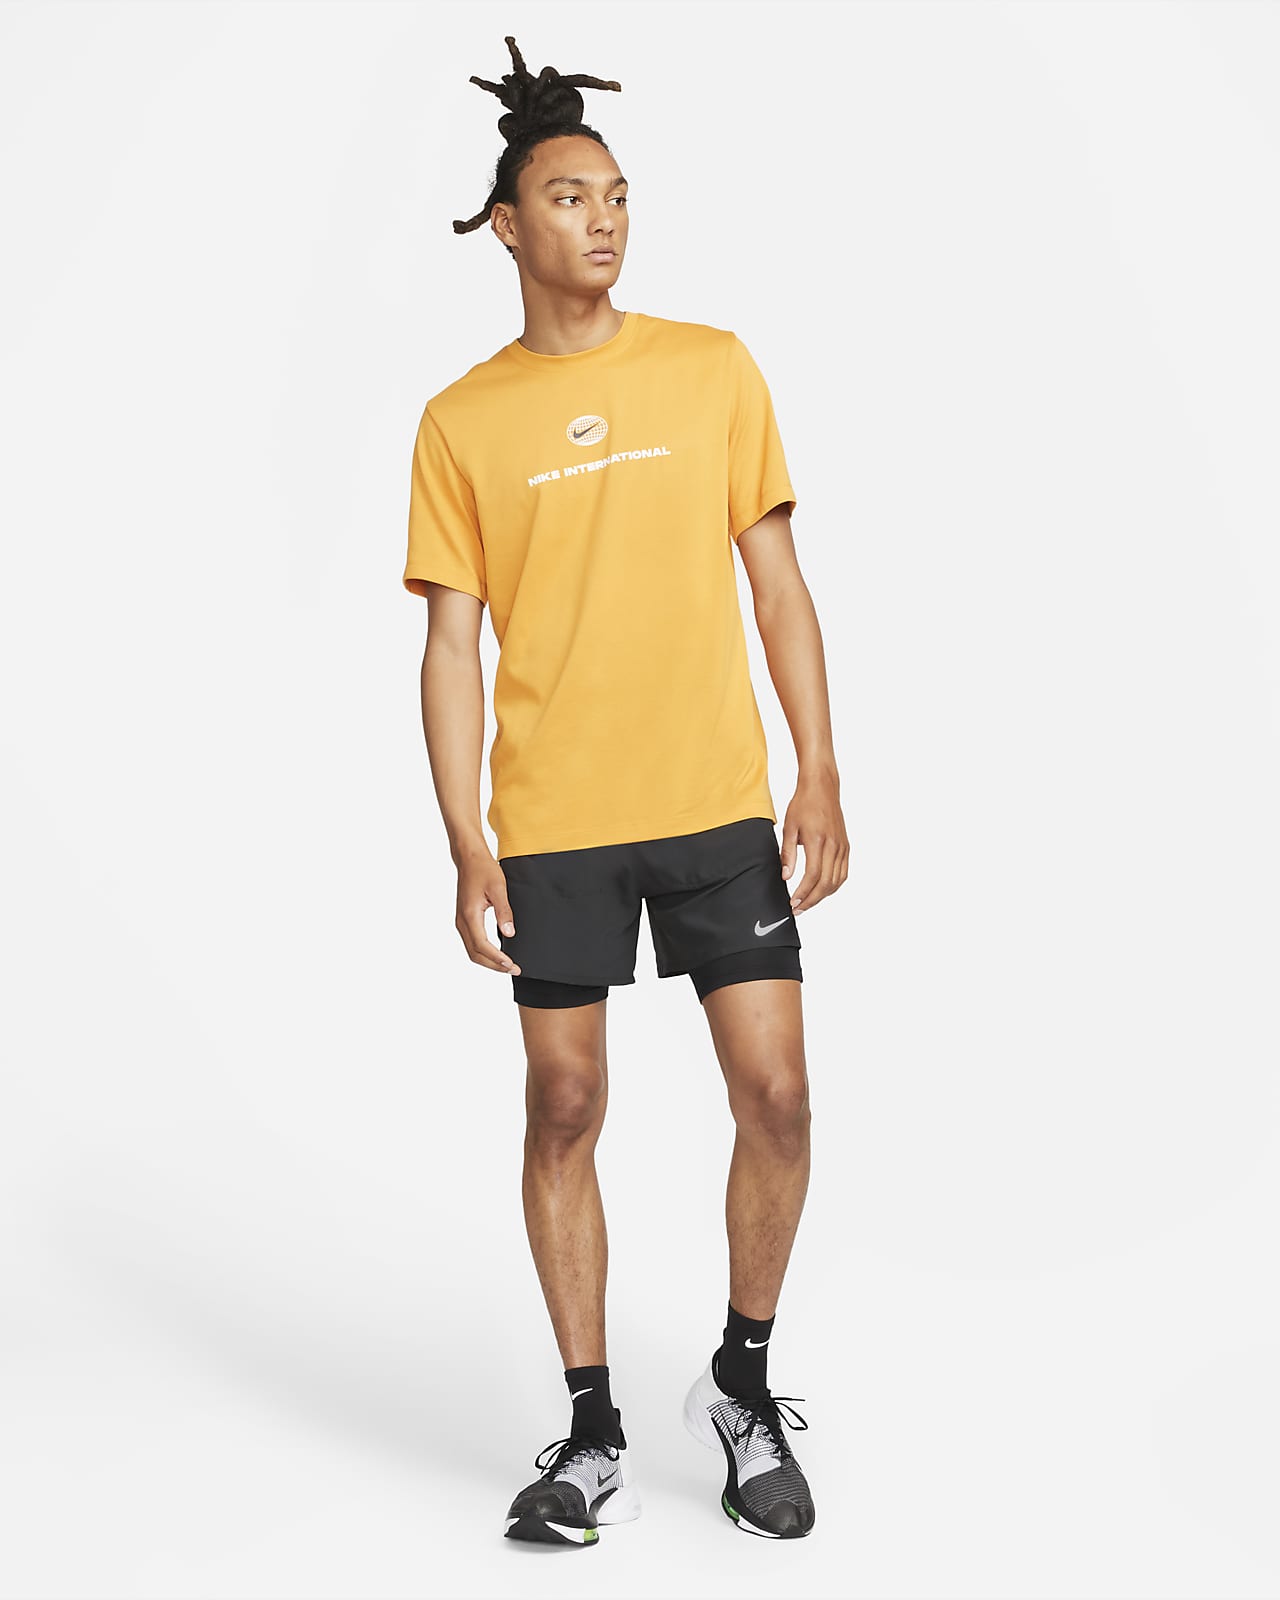 Nike Stride Men's Dri-FIT 5 Hybrid Running Shorts.